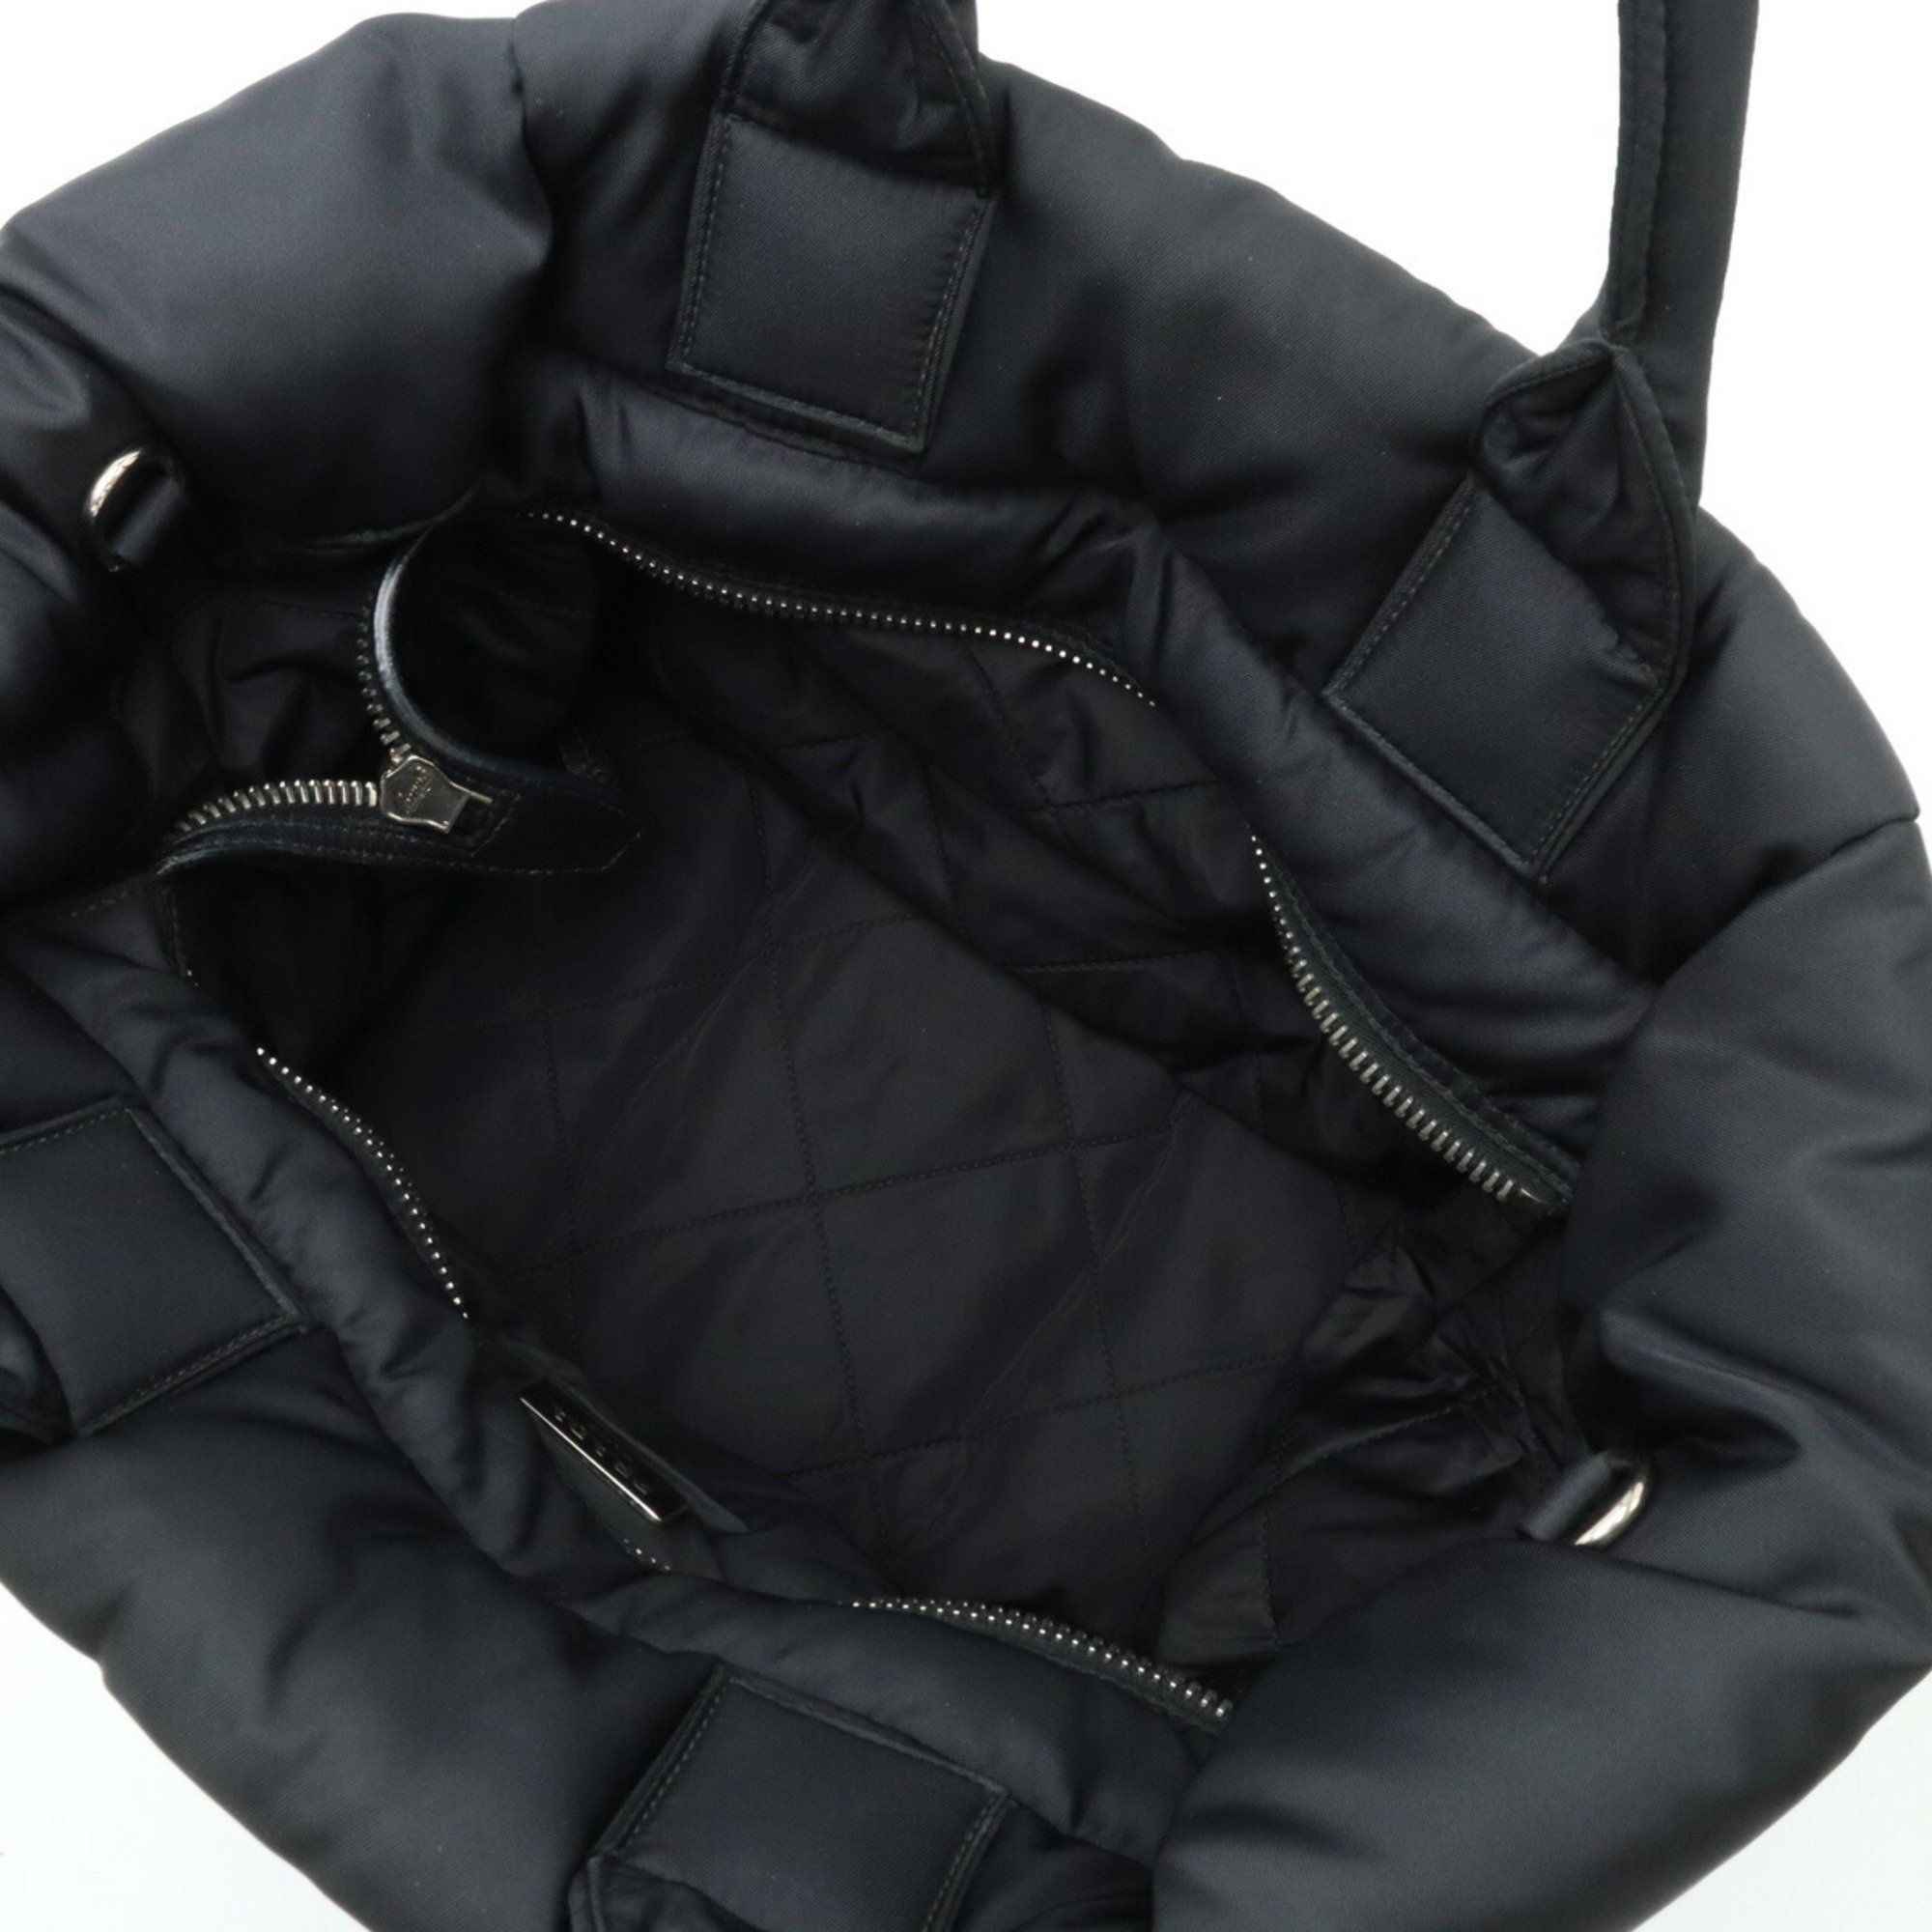 PRADA TESSUTO BOMBER Bomber Tote Bag Shoulder Nylon Leather NERO Black Purchased at a Japanese boutique BN2632